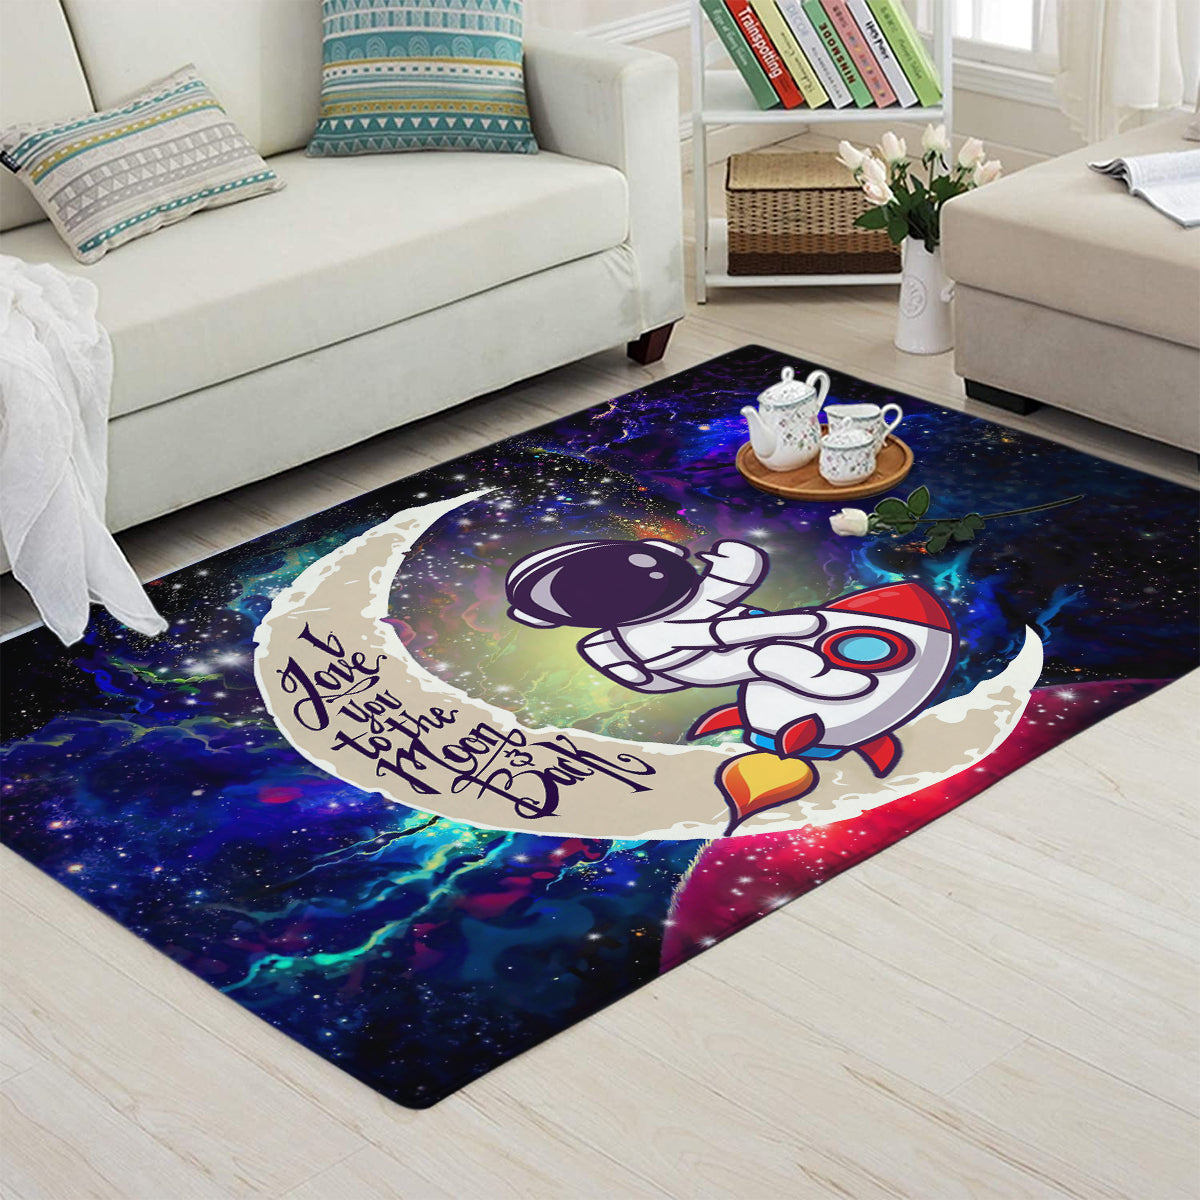 Astronaut Chibi Love You To The Moon Galaxy Carpet Rug Home Room Decor